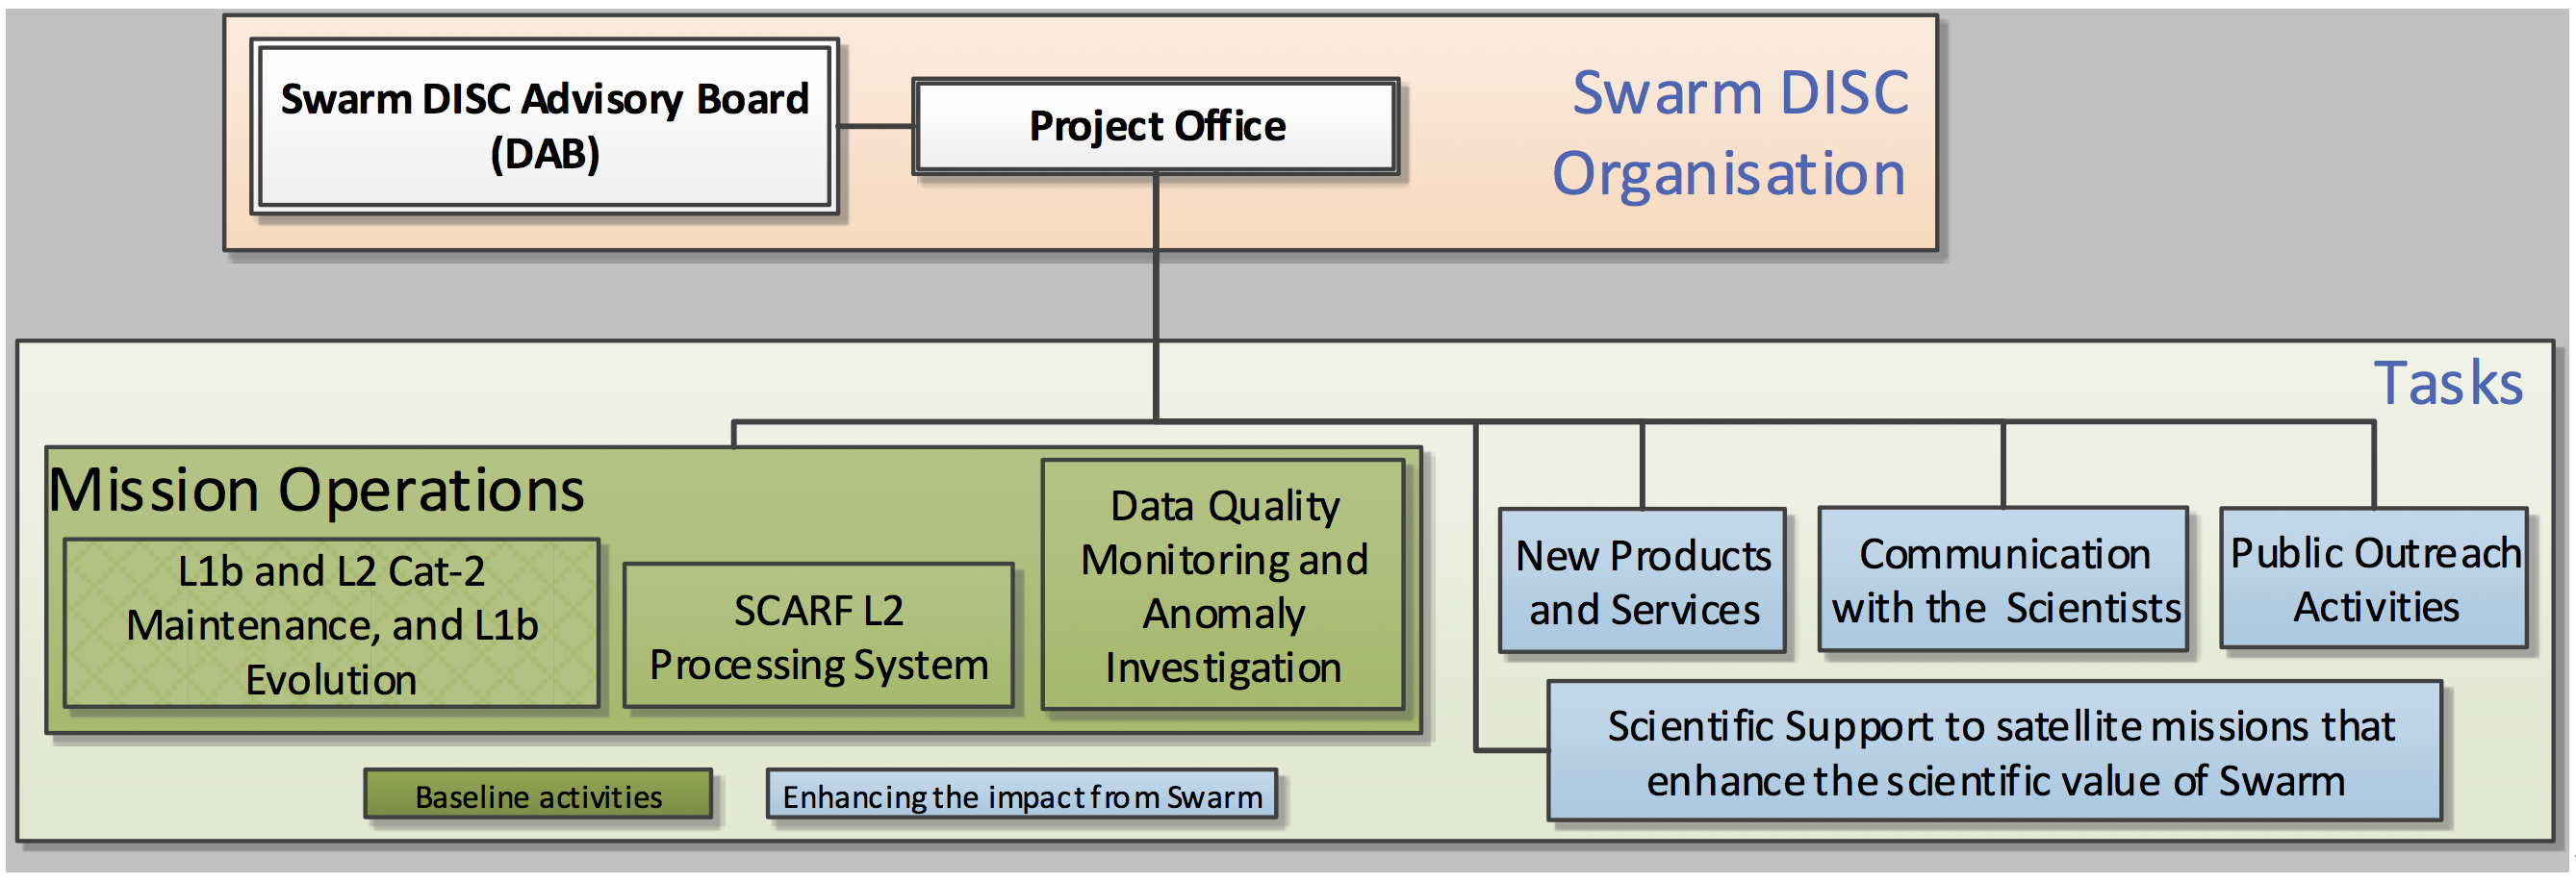 Swarm DISC Organisation map